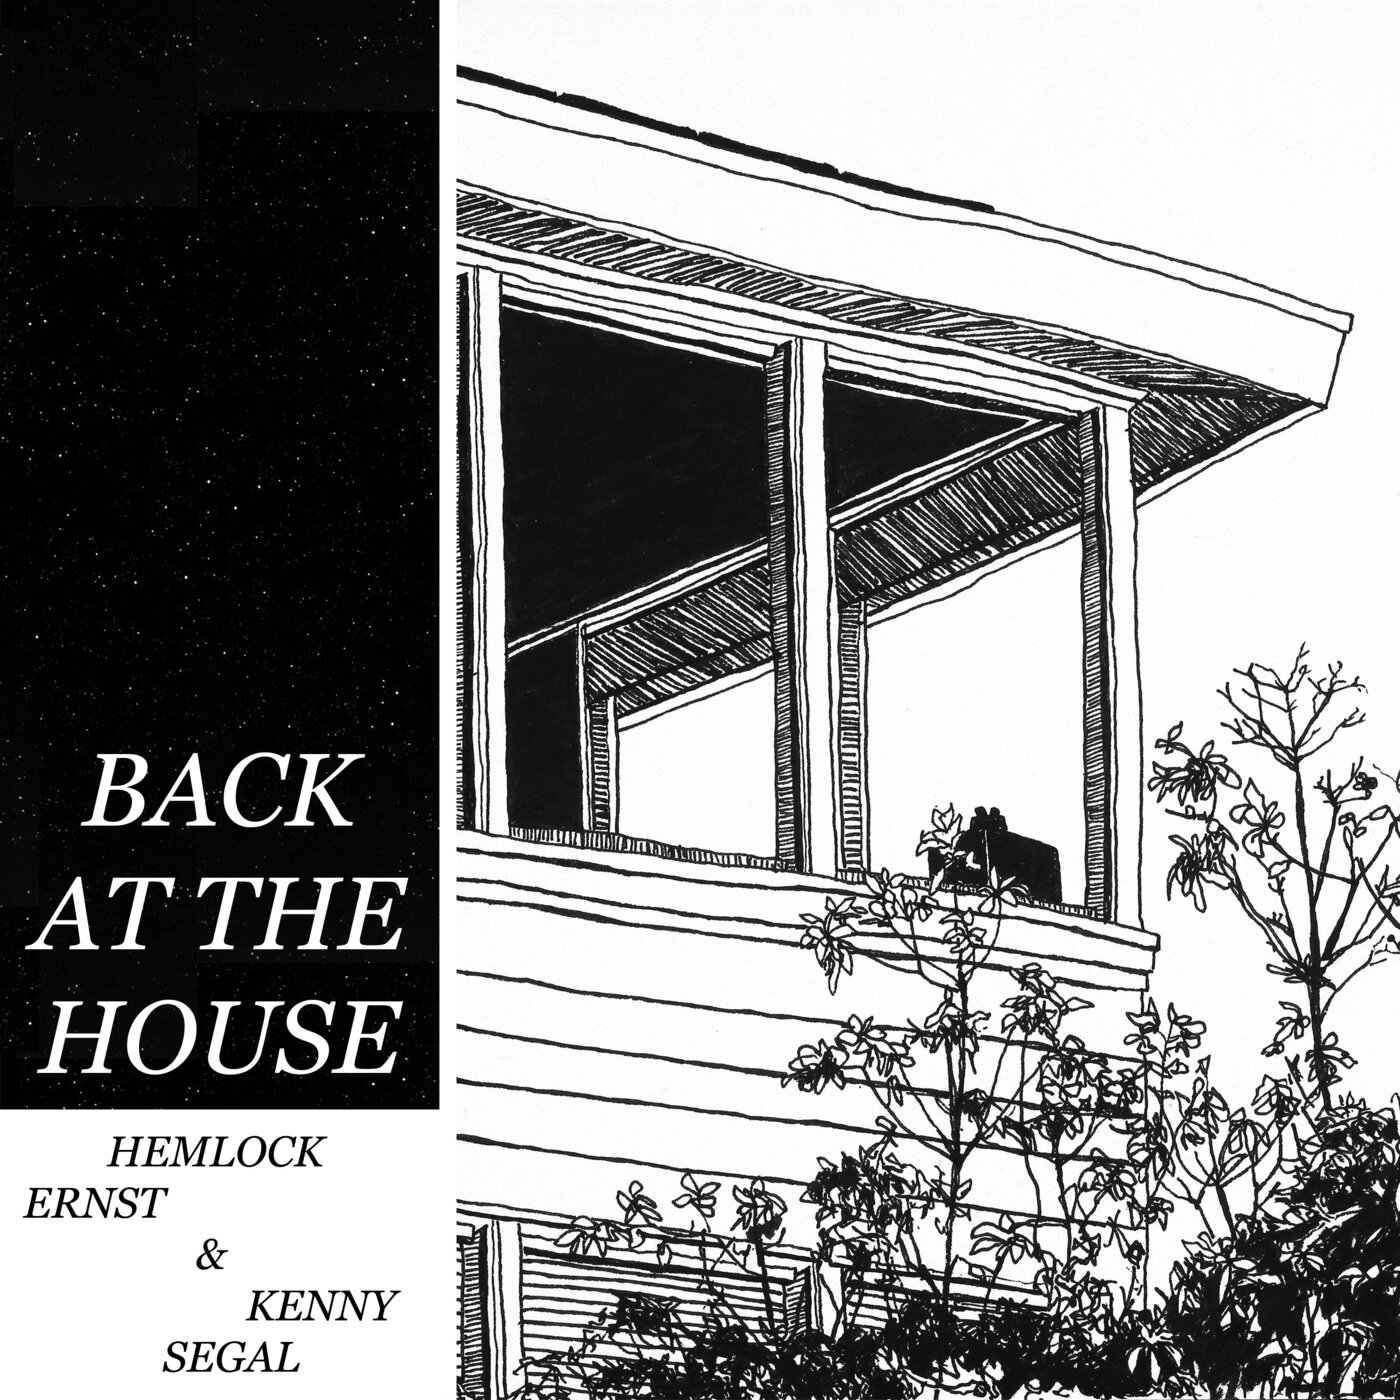 23 Hemlock Ernst and Kenny SegalBack At The House.jpg